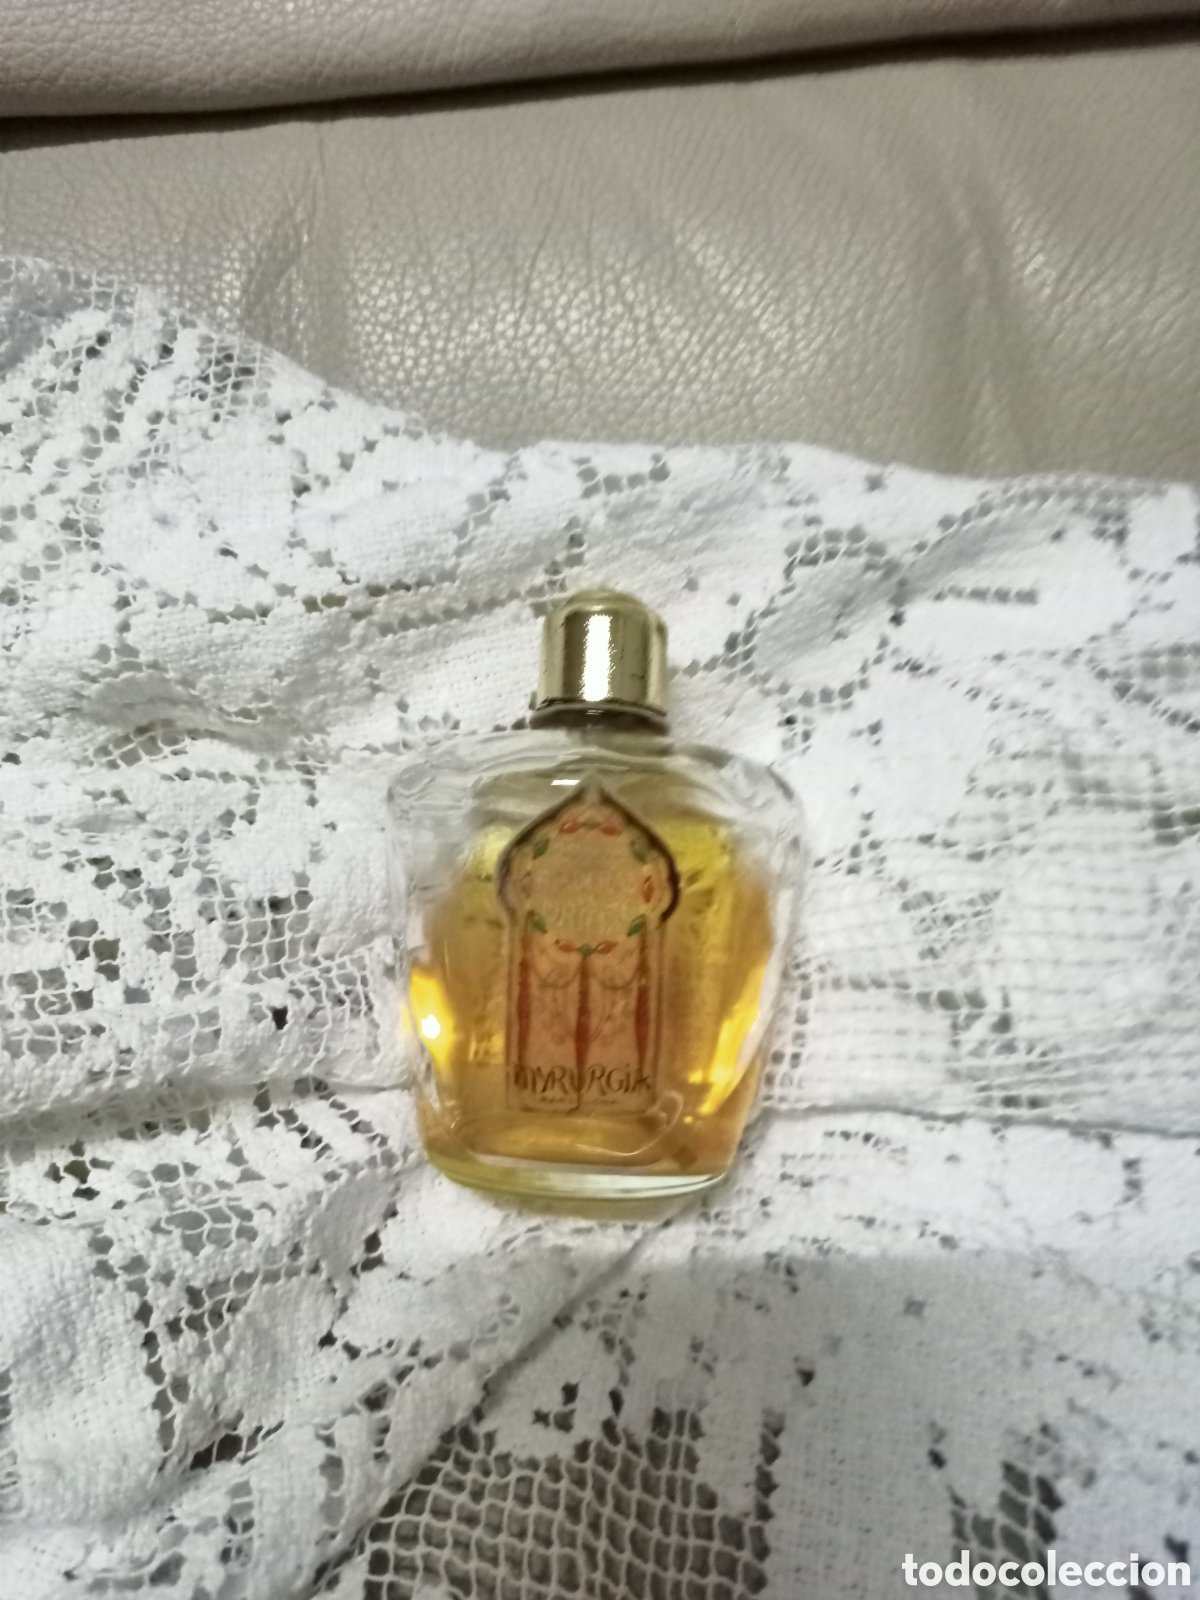 antiguo frasco de perfume maderas de oriente. m - Buy Antique perfume  miniatures and bottles on todocoleccion